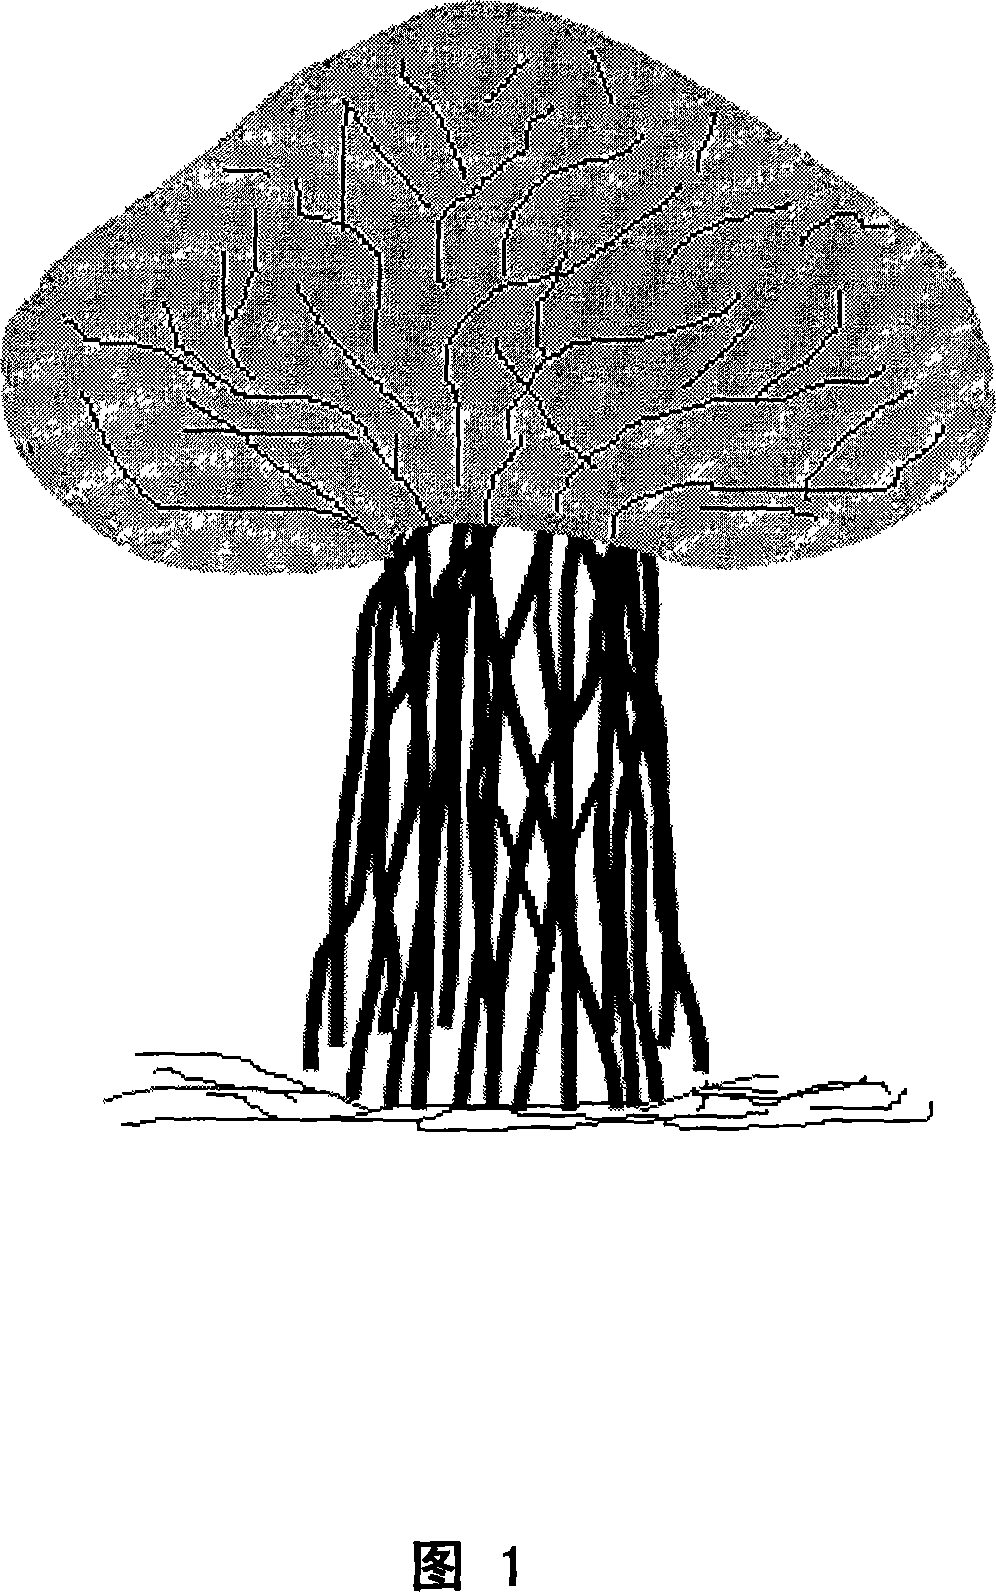 Method of combining small trees into big tree